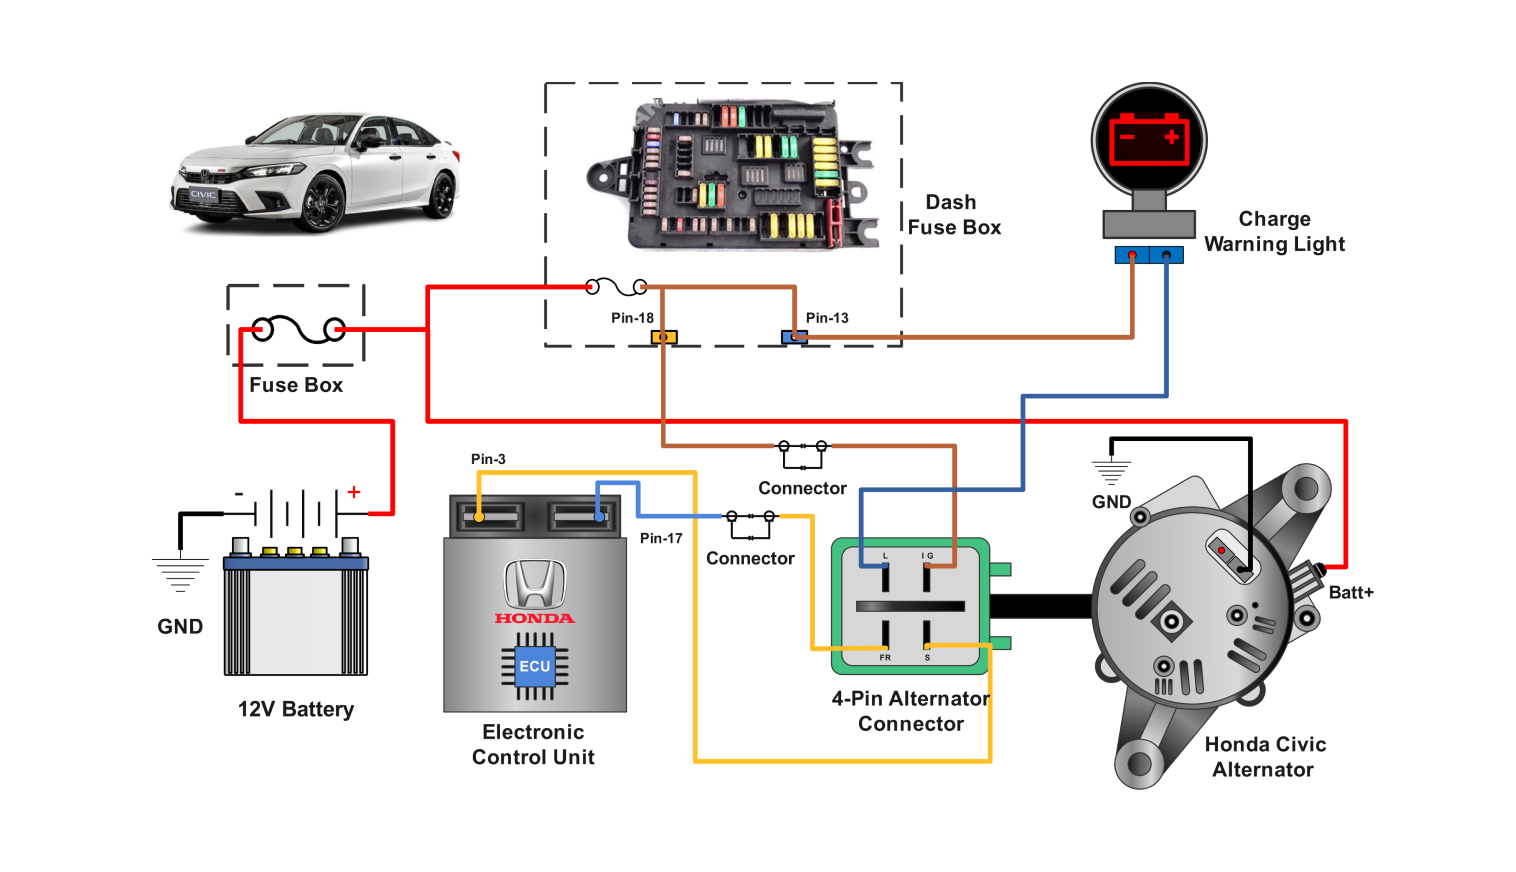 Honda Civic alternator wiring diagram